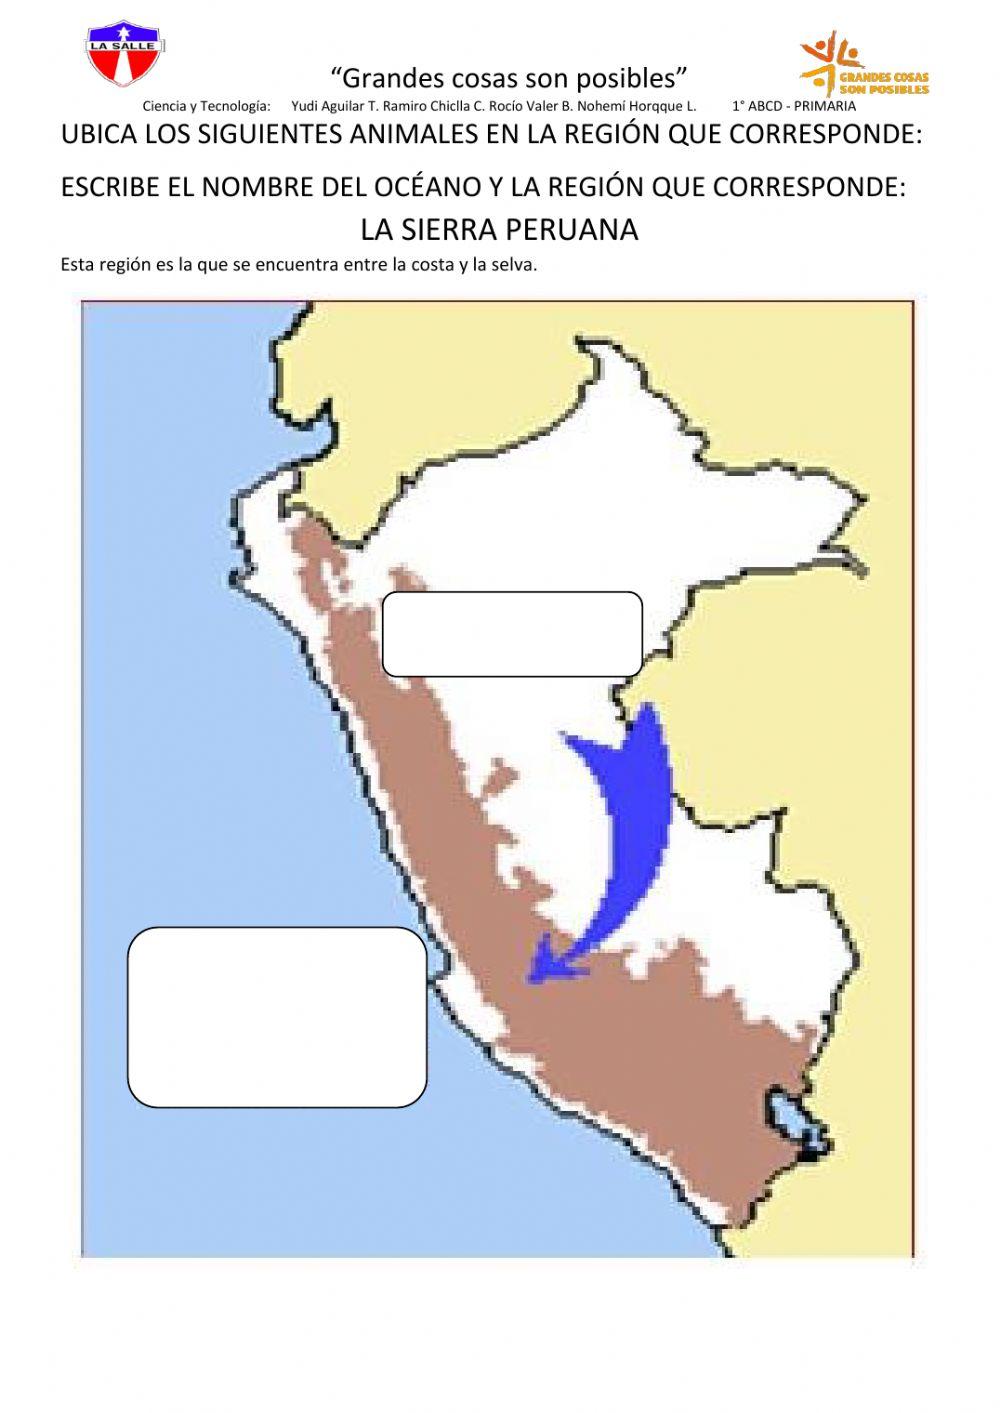 La sierra peruana